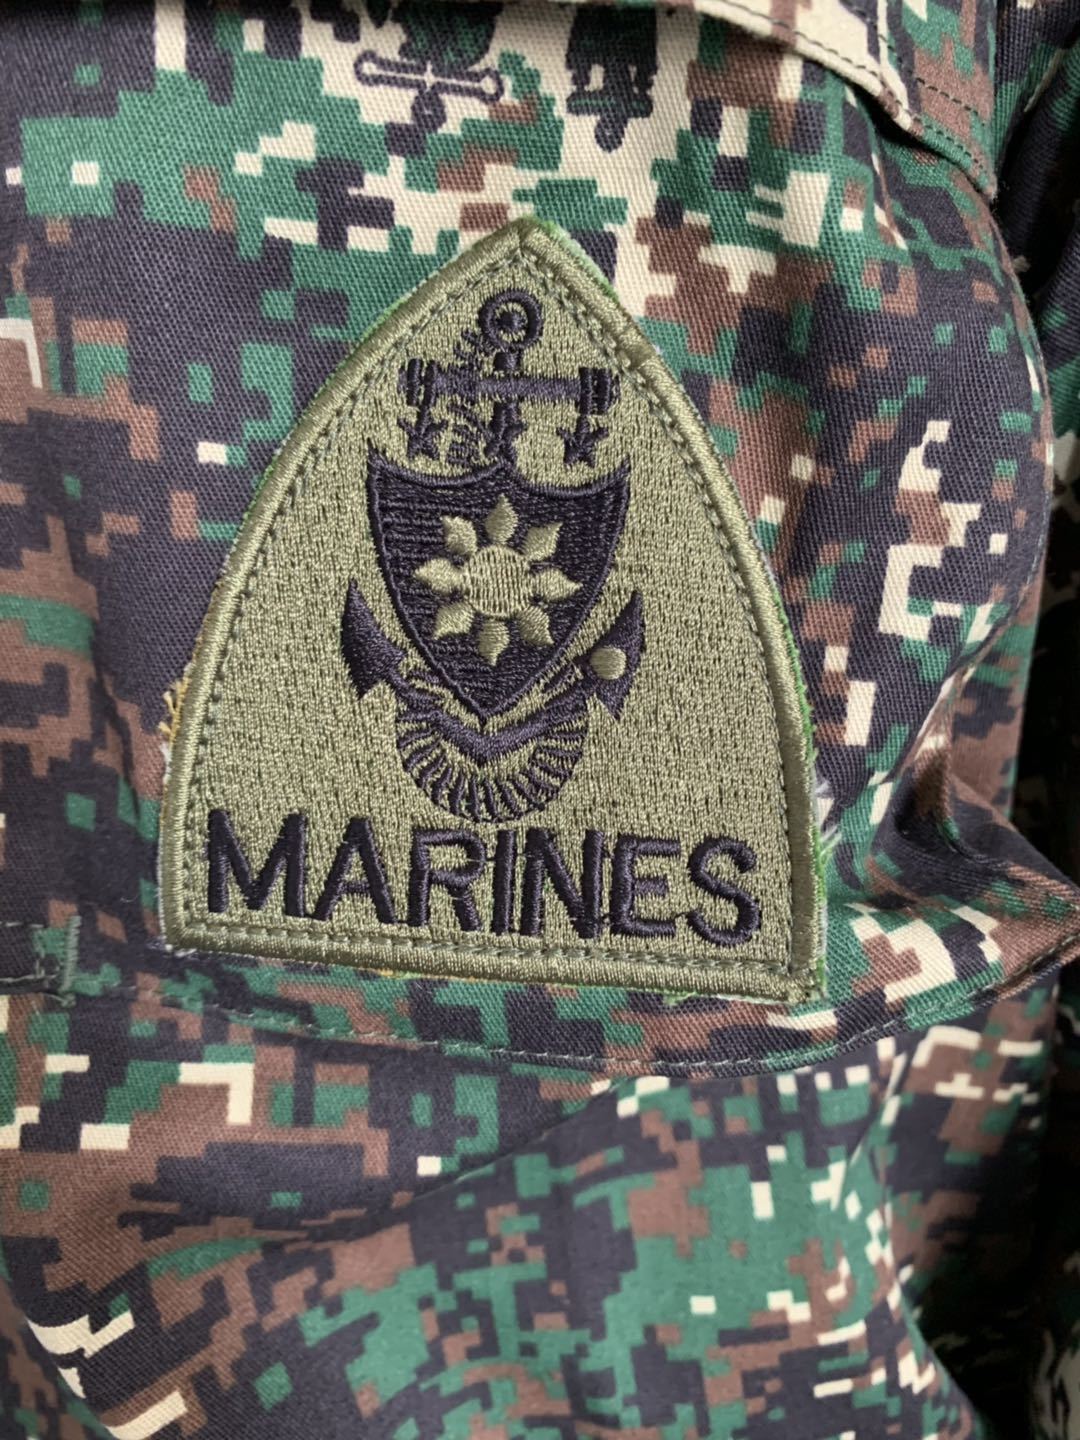 Philippines Army Marine Digital Camouflage Military Uniform